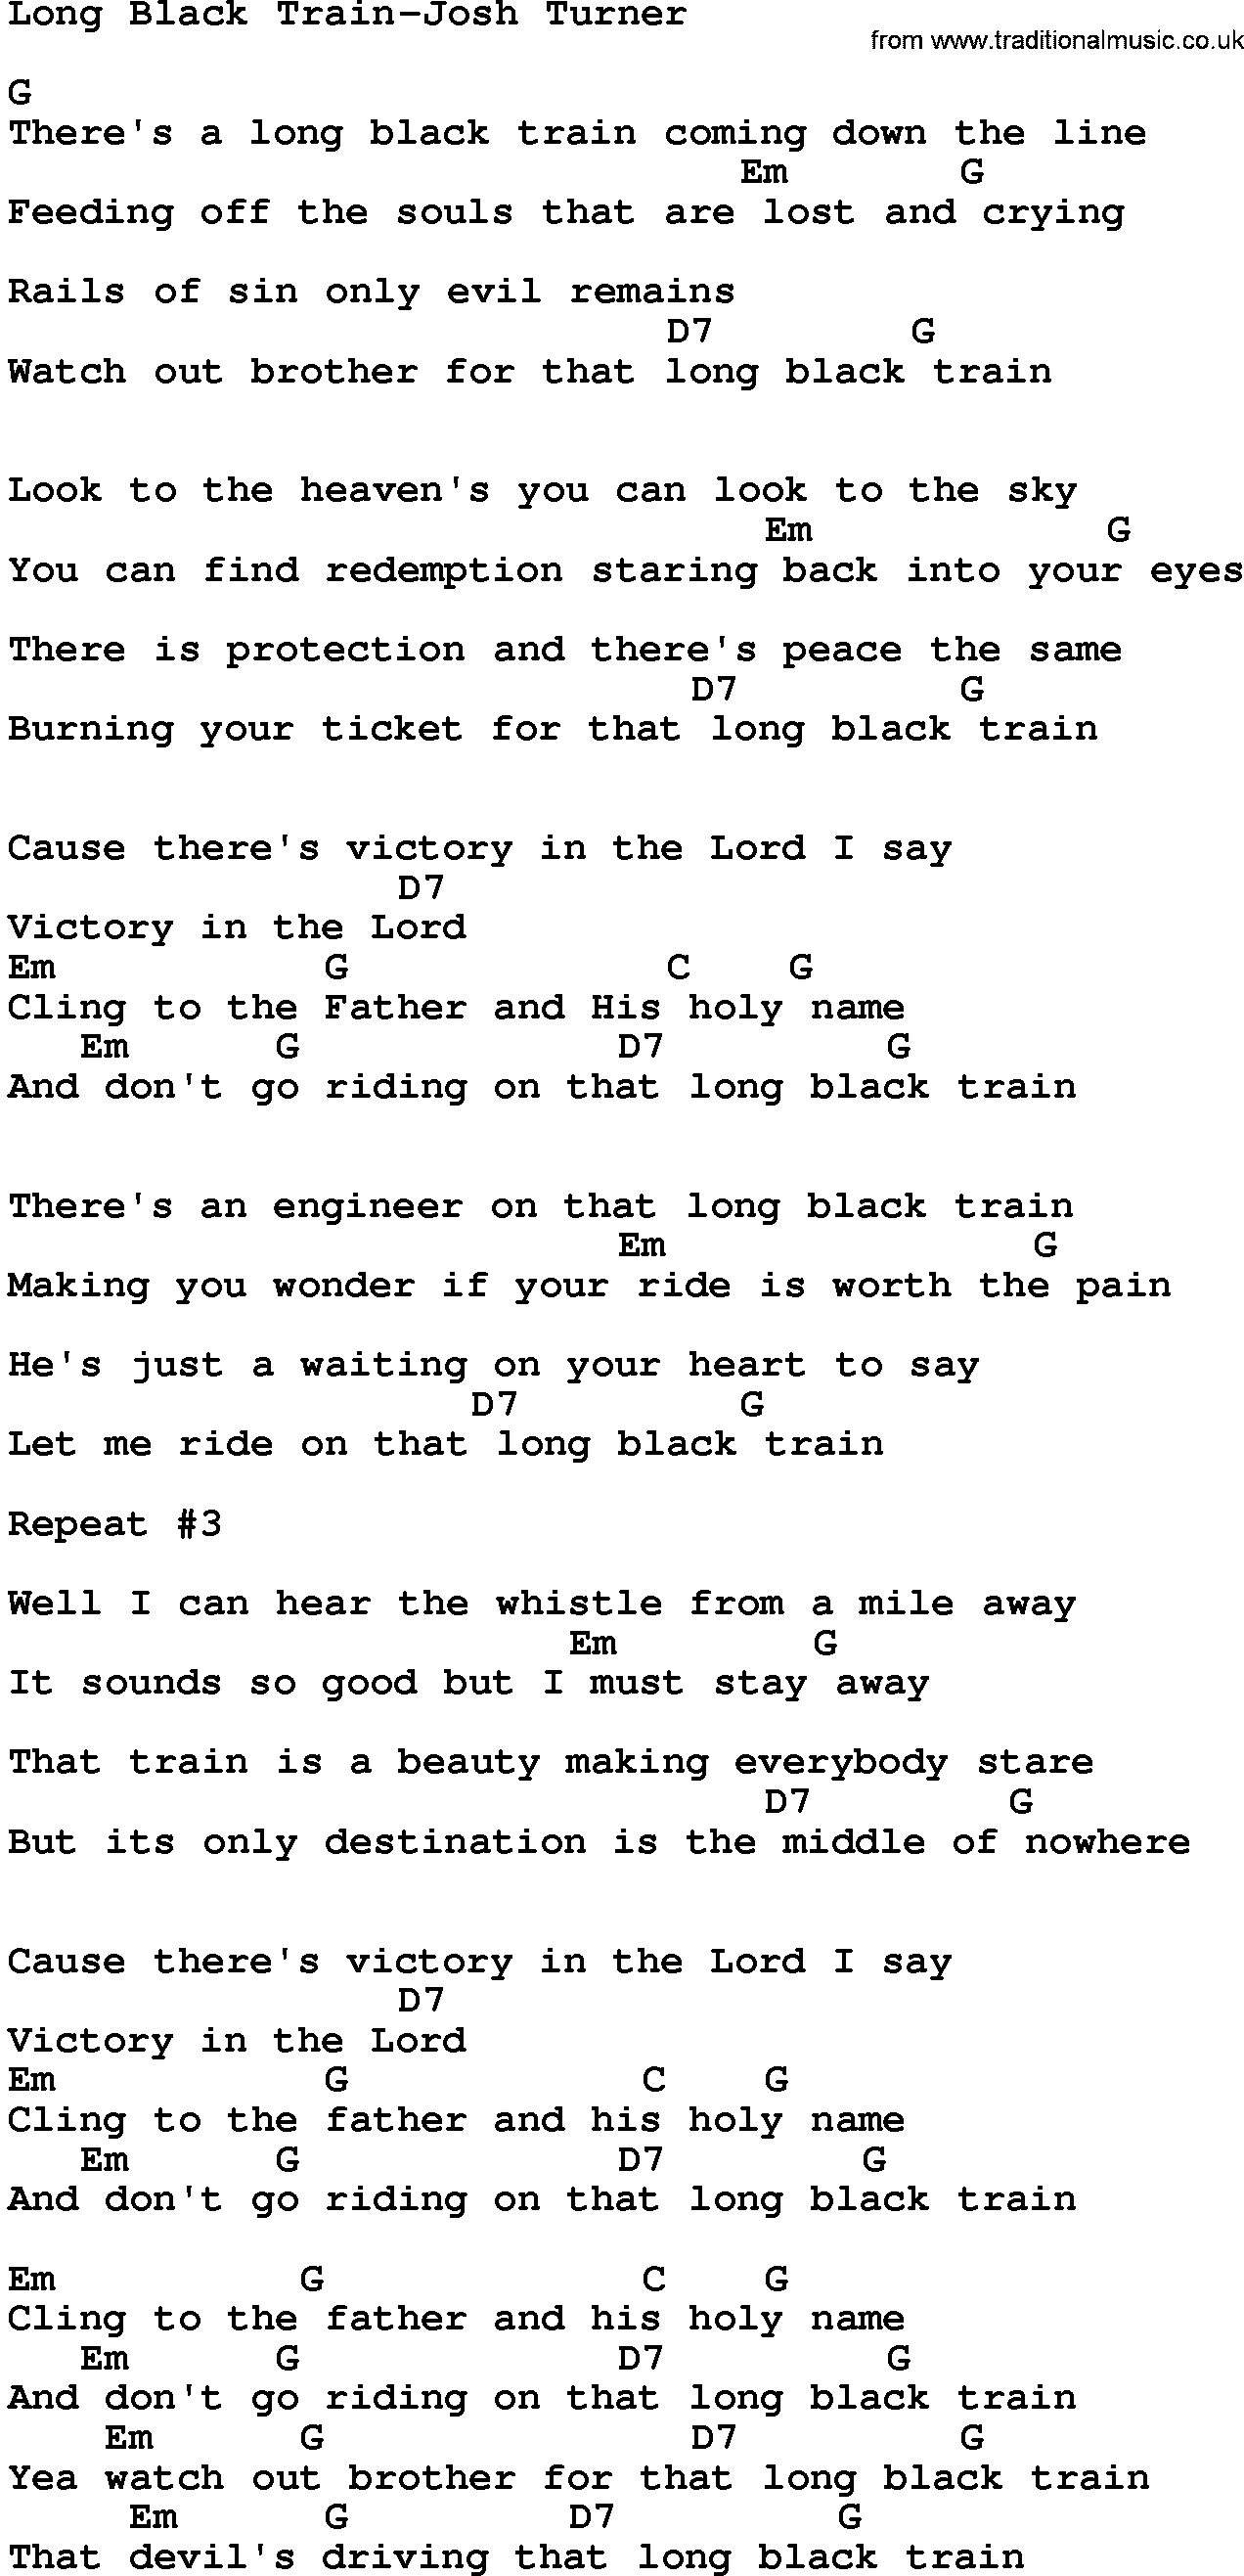 Country music song: Long Black Train-Josh Turner lyrics and chords